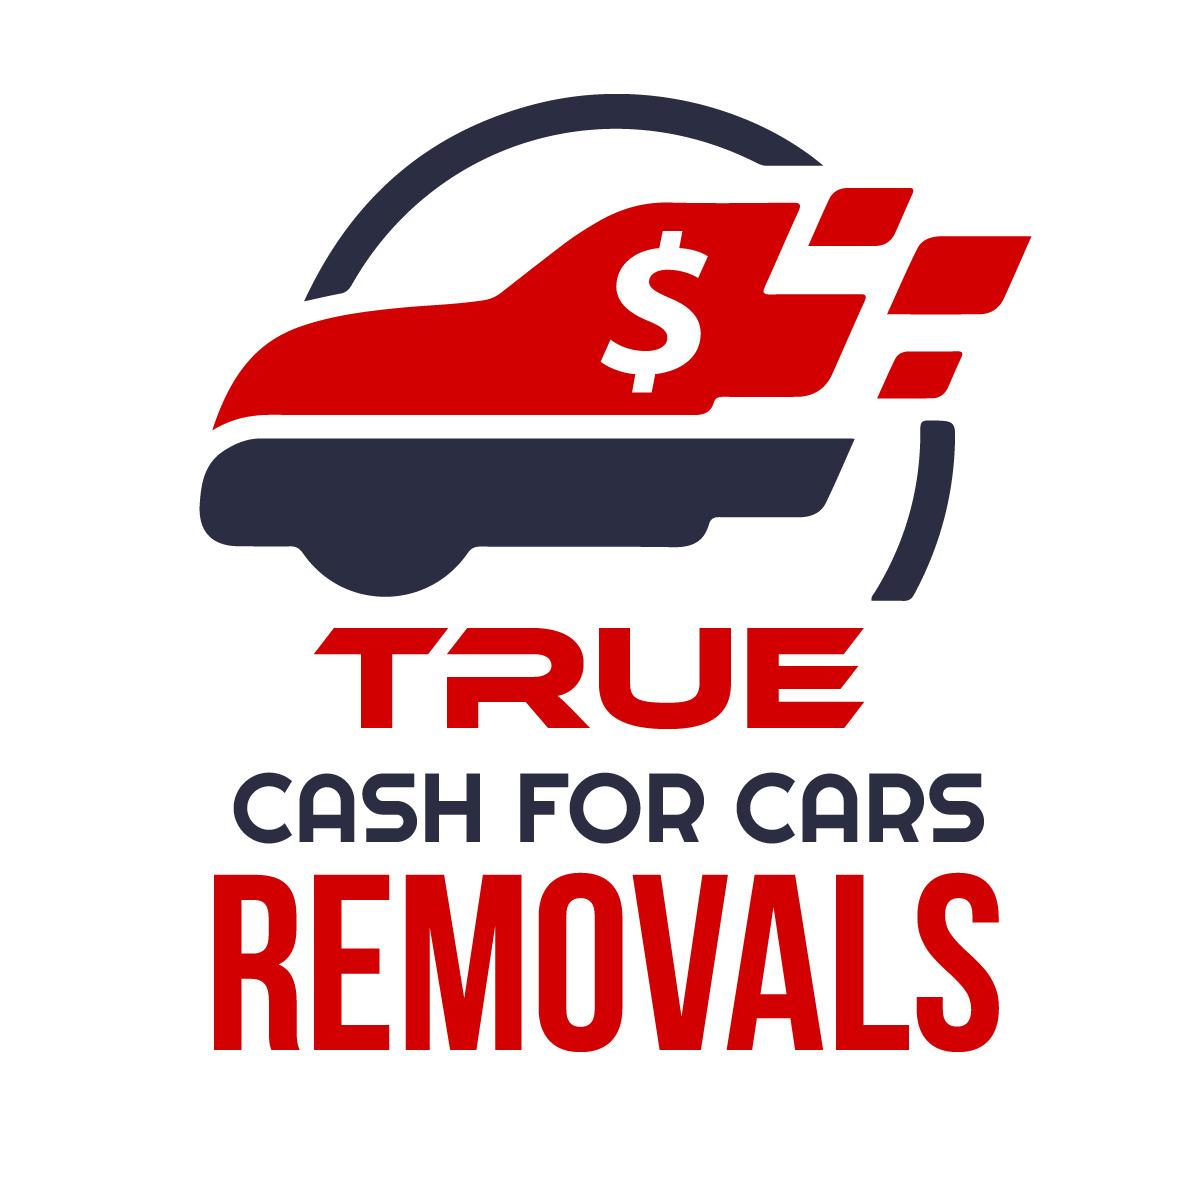 True Cash for Cars Removals Logo